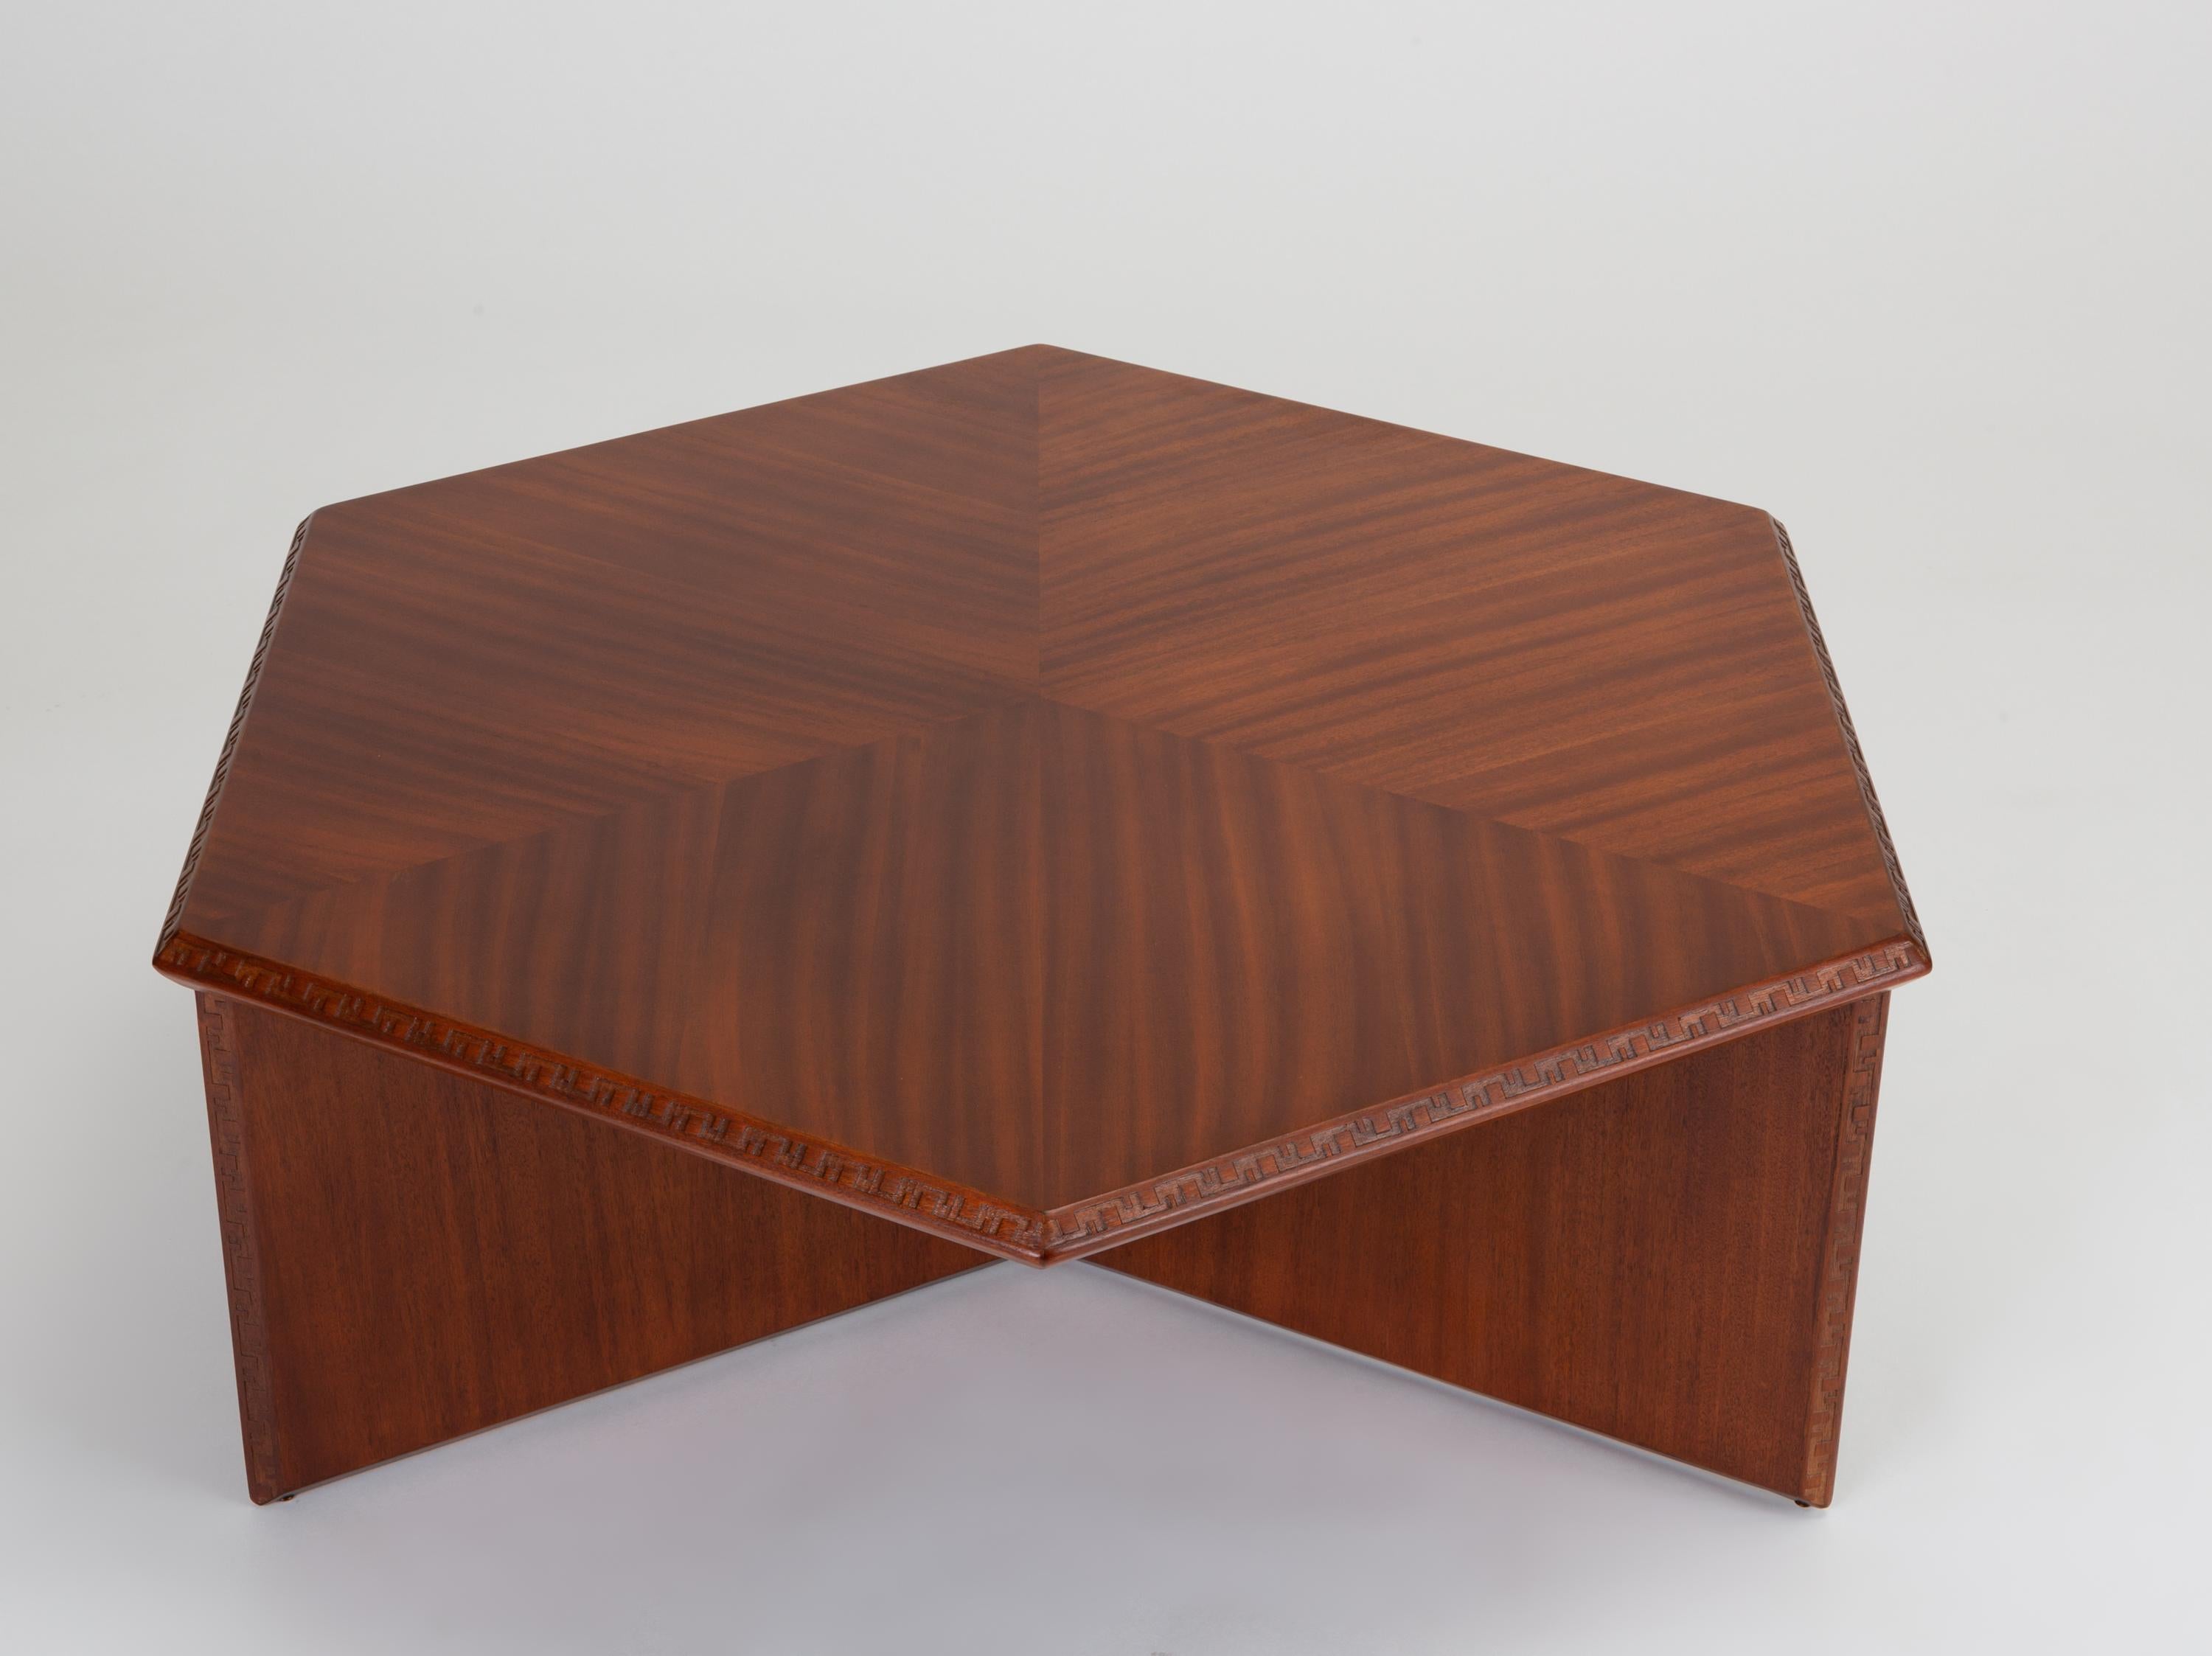 Frank Lloyd Wright “Taliesin” Coffee Table for Heritage-Henredon 3